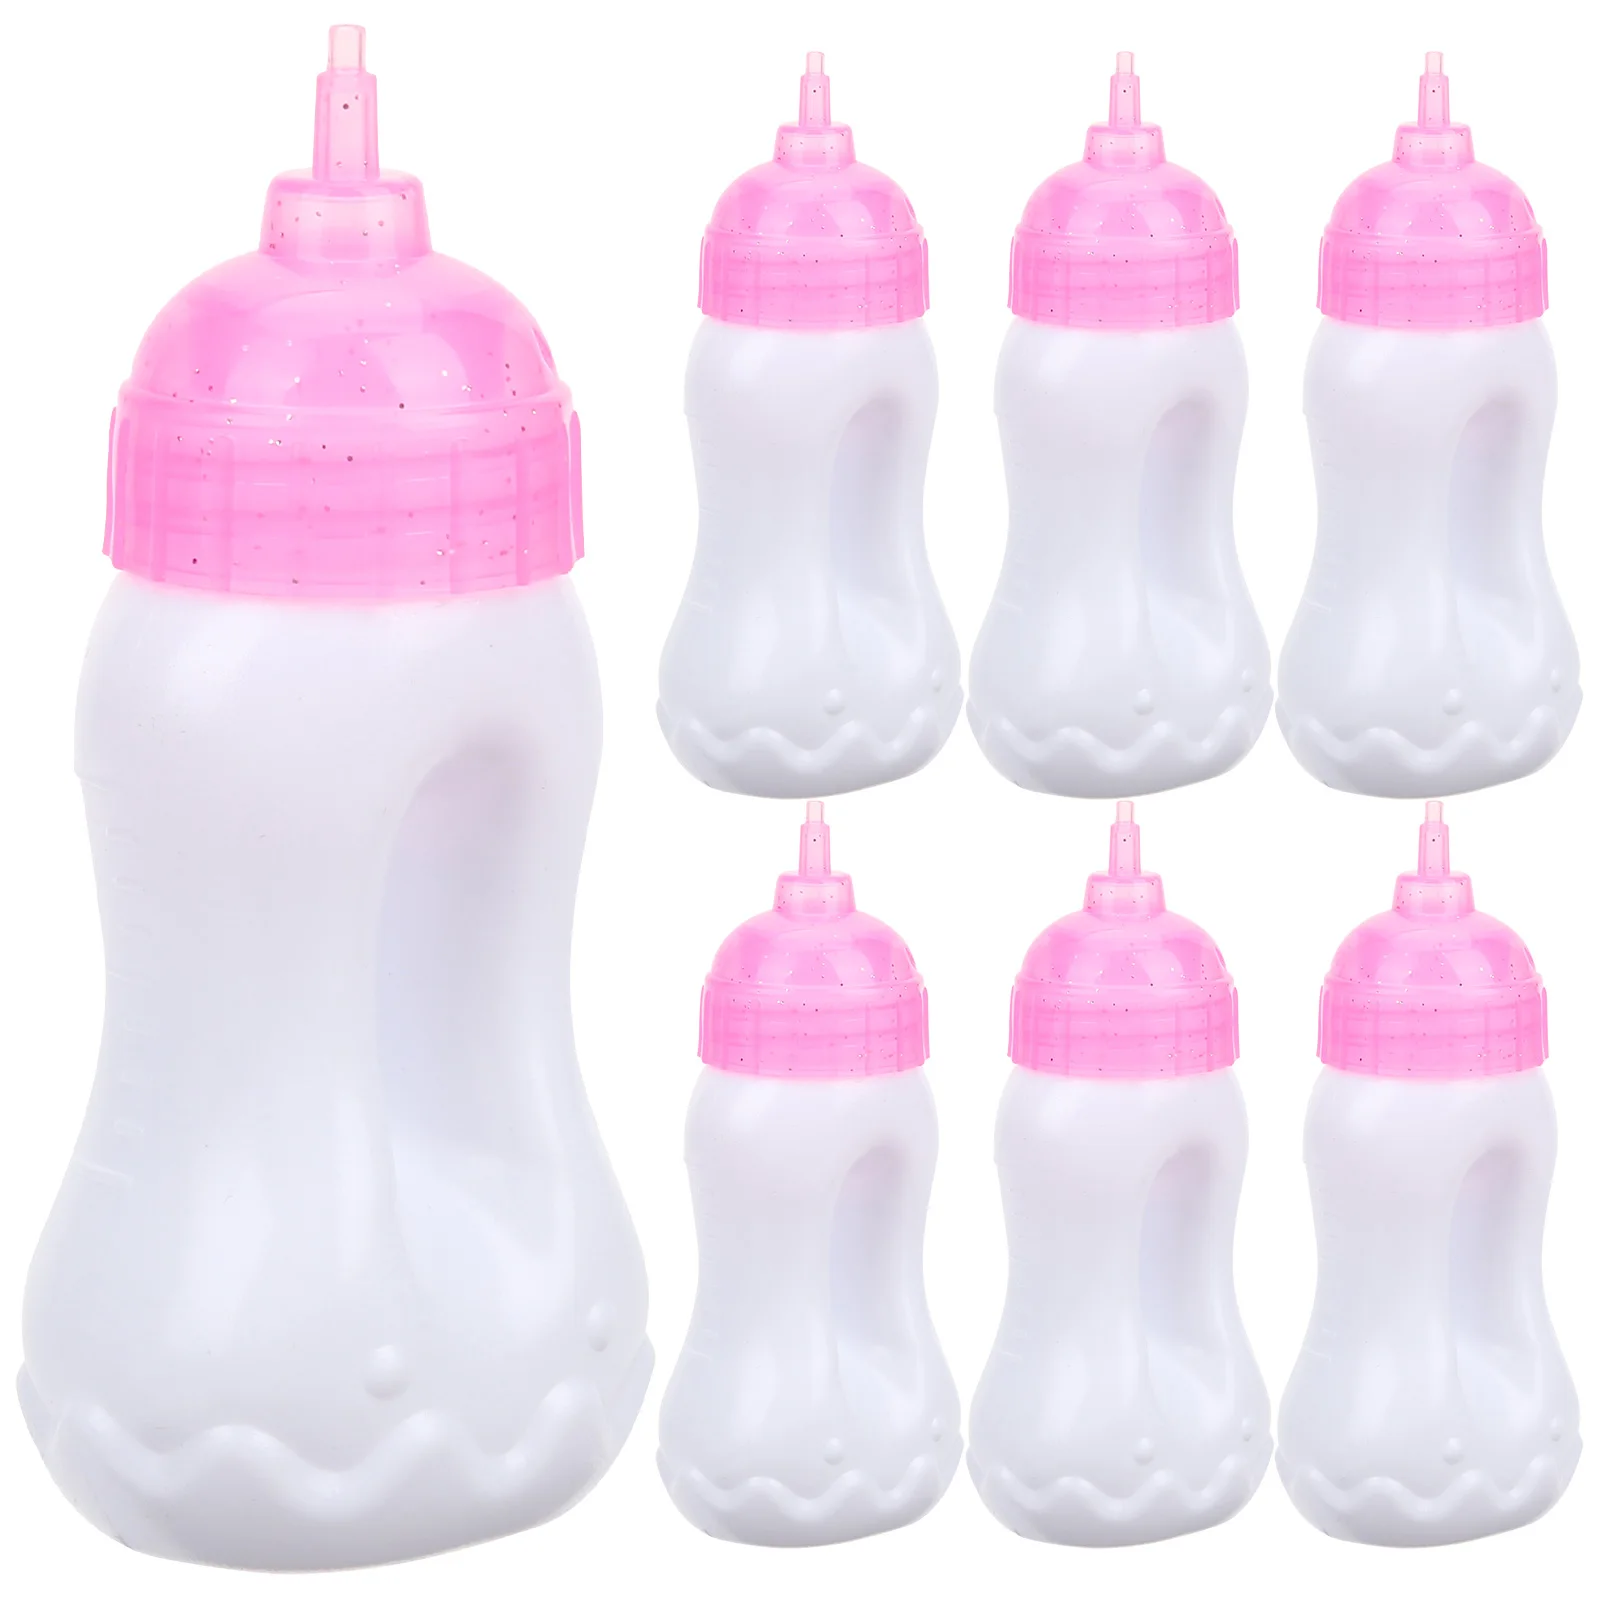 10pcs Baby Doll Bottles Miniature Milk Bottle Small Juice Bottle Infant Pacifier Baby Doll Accessories